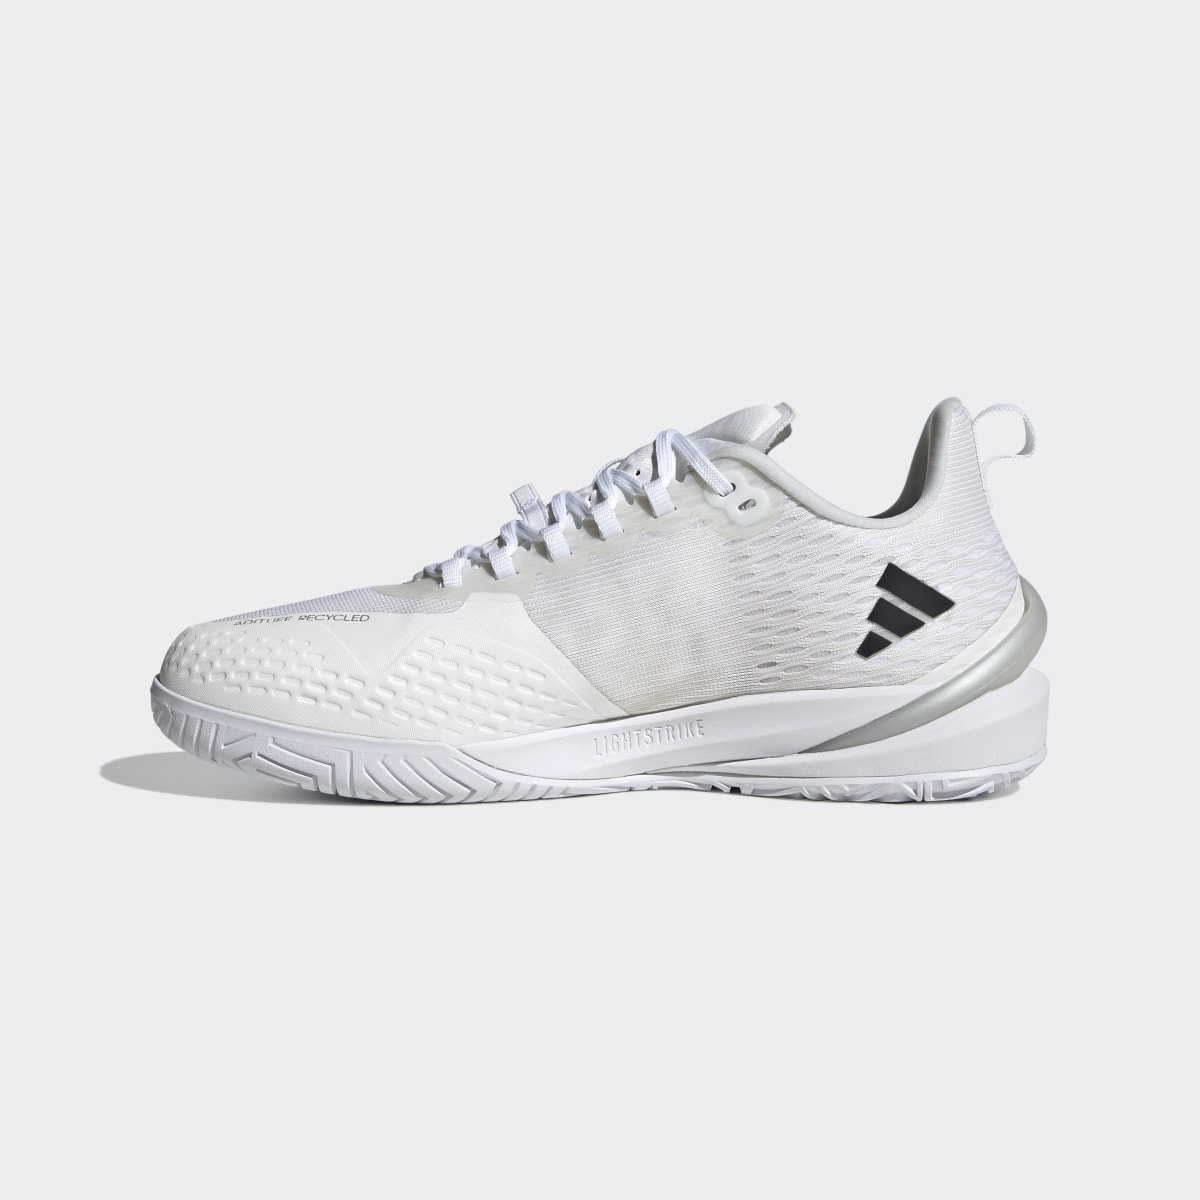 Adidas adizero Cybersonic Tenis Ayakkabısı. 10